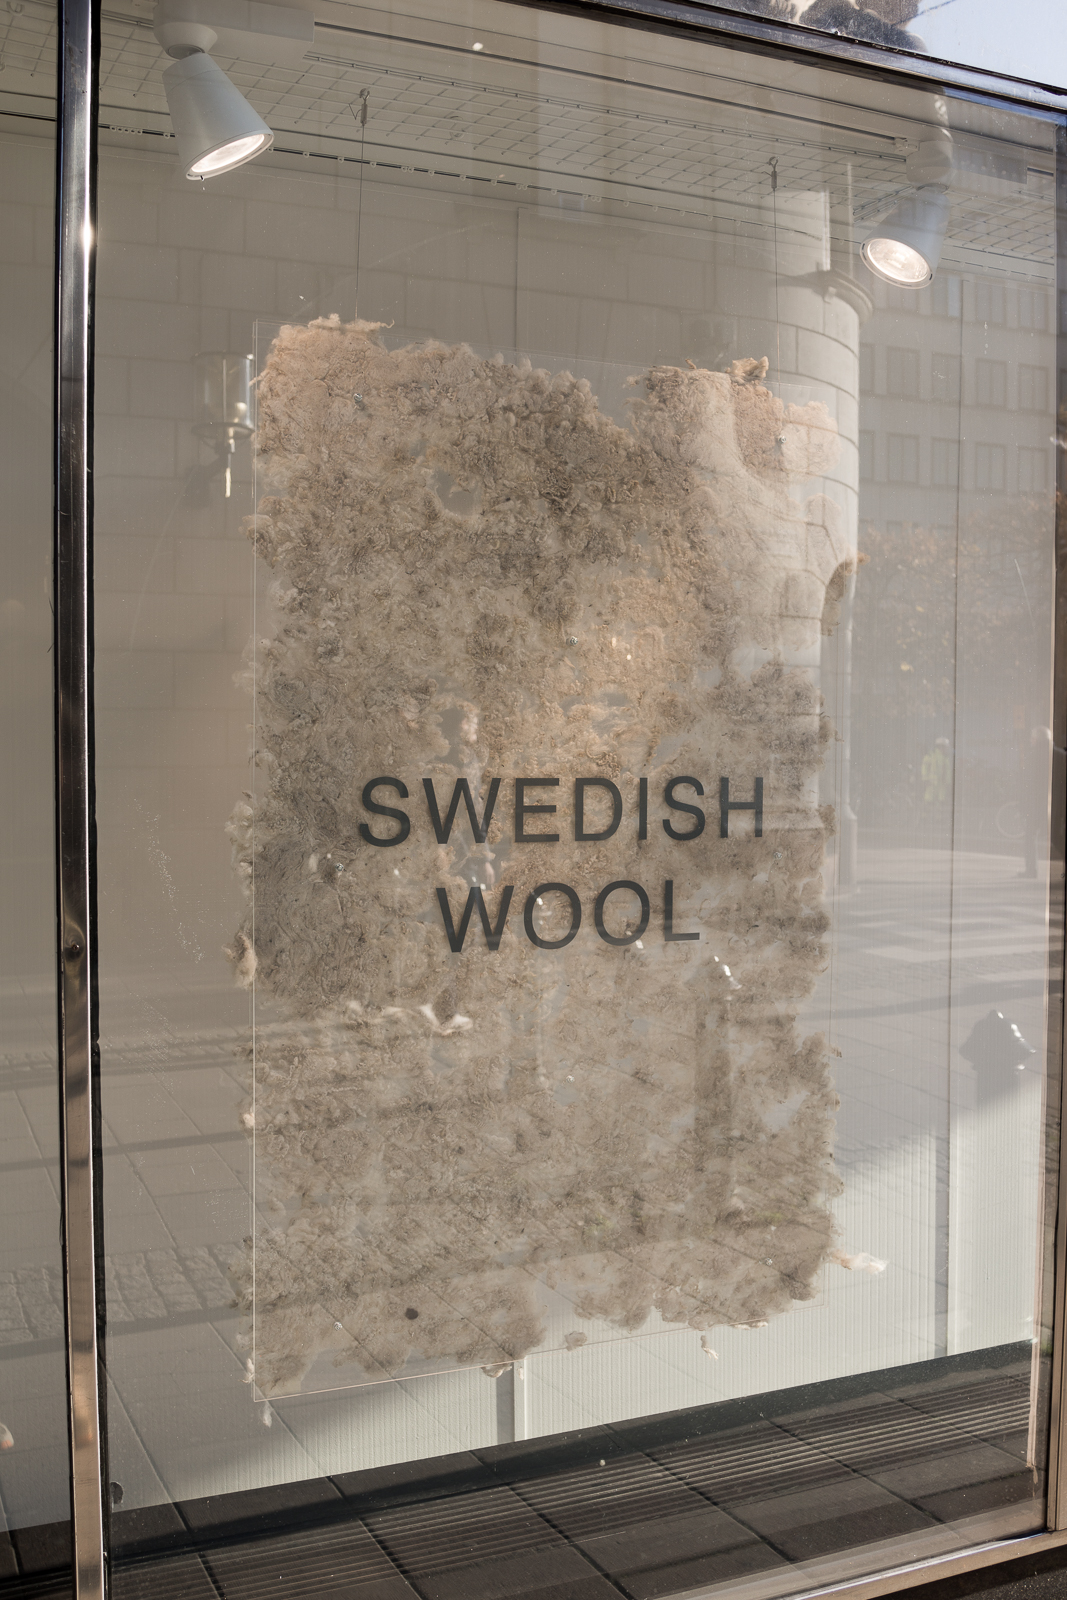 Filippa K - Swedish wool 2019